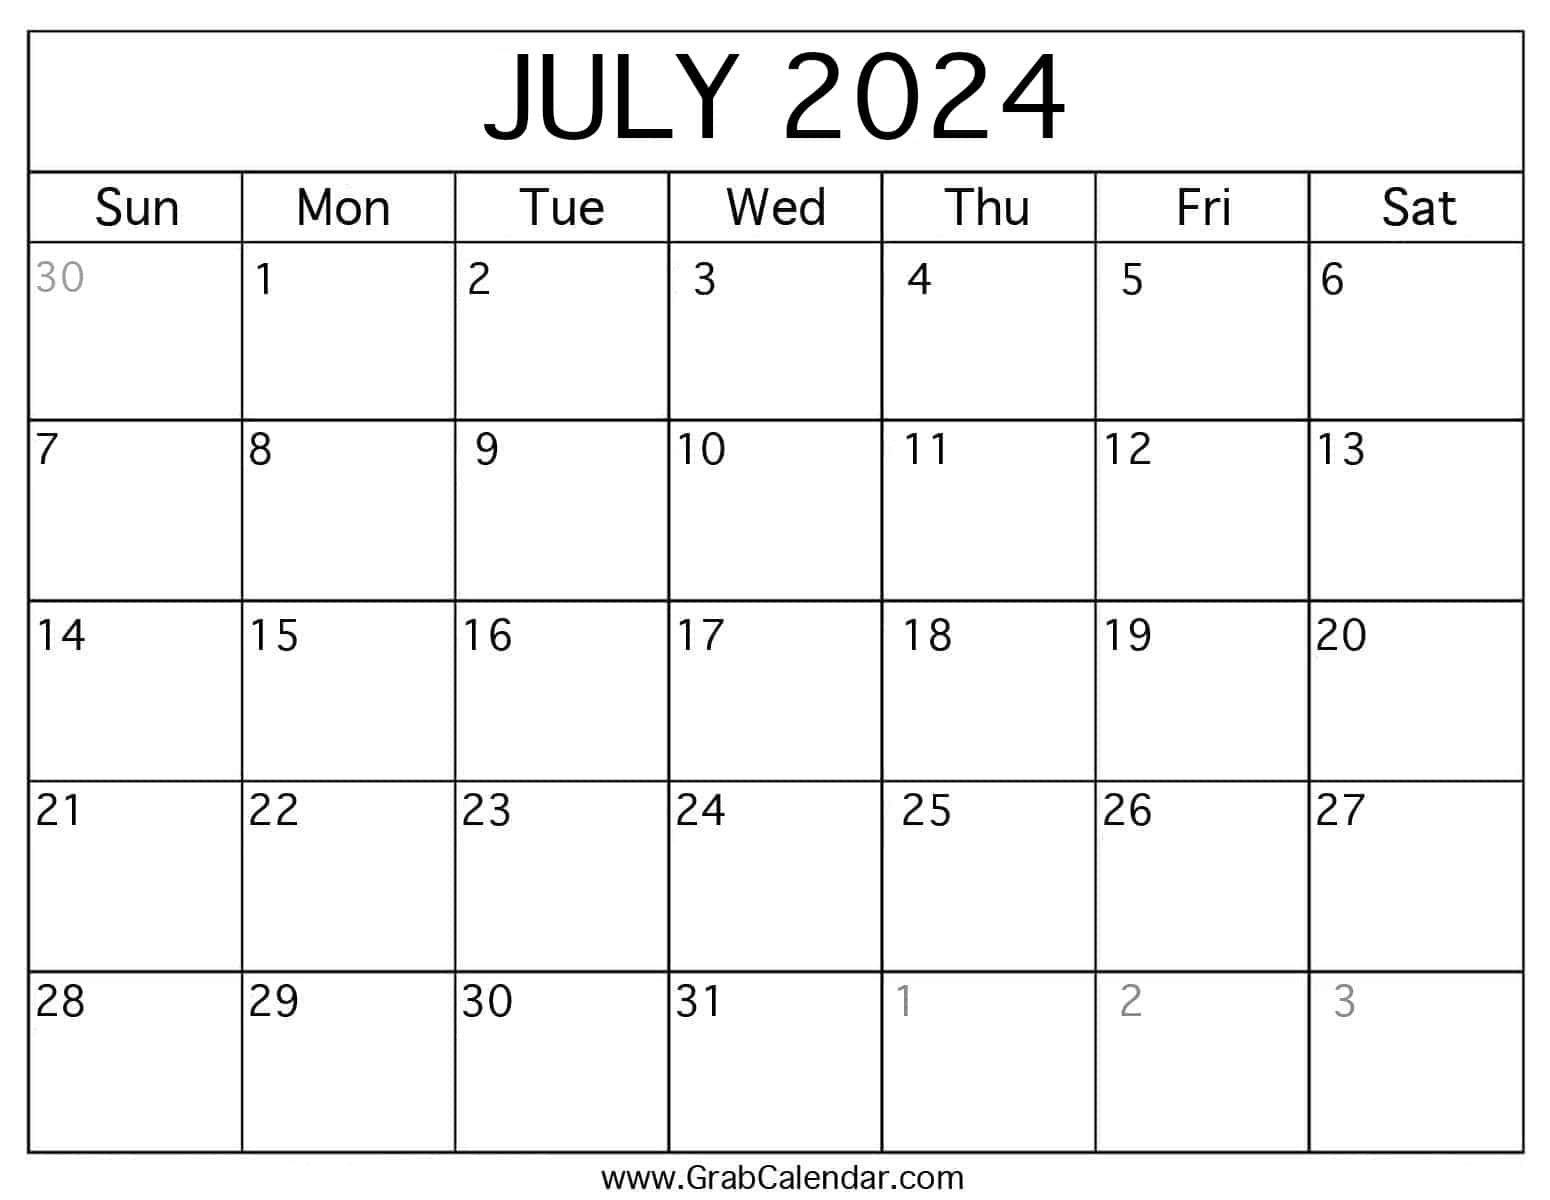 Printable July 2024 Calendar regarding Pic of July 2024 Calendar